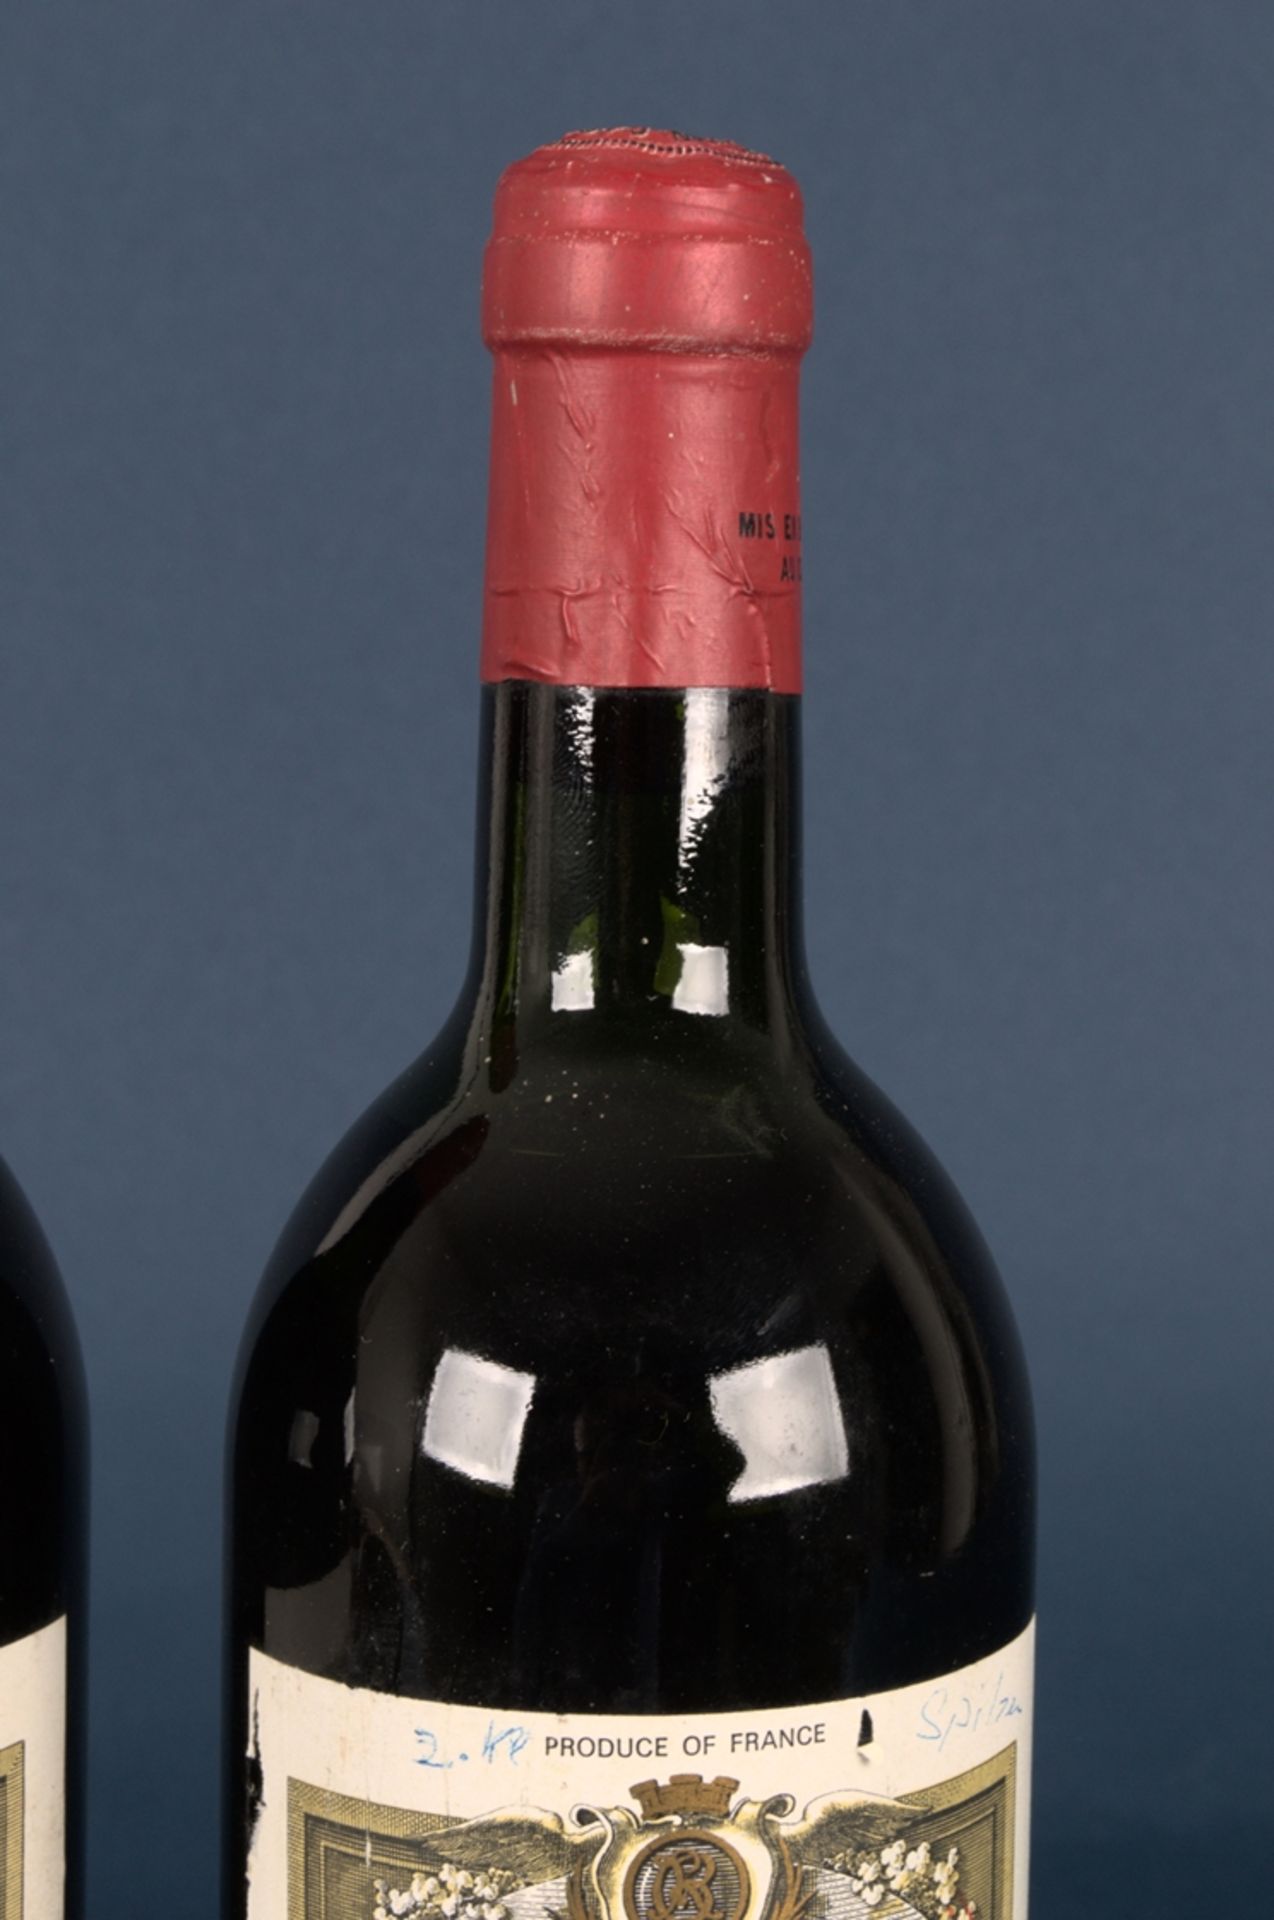 2 Flaschen Rotwein 1978er "Chateau Rauzan Gassies", 2eme Grand Cru Classe Margaux Bordeaux. - Bild 9 aus 9